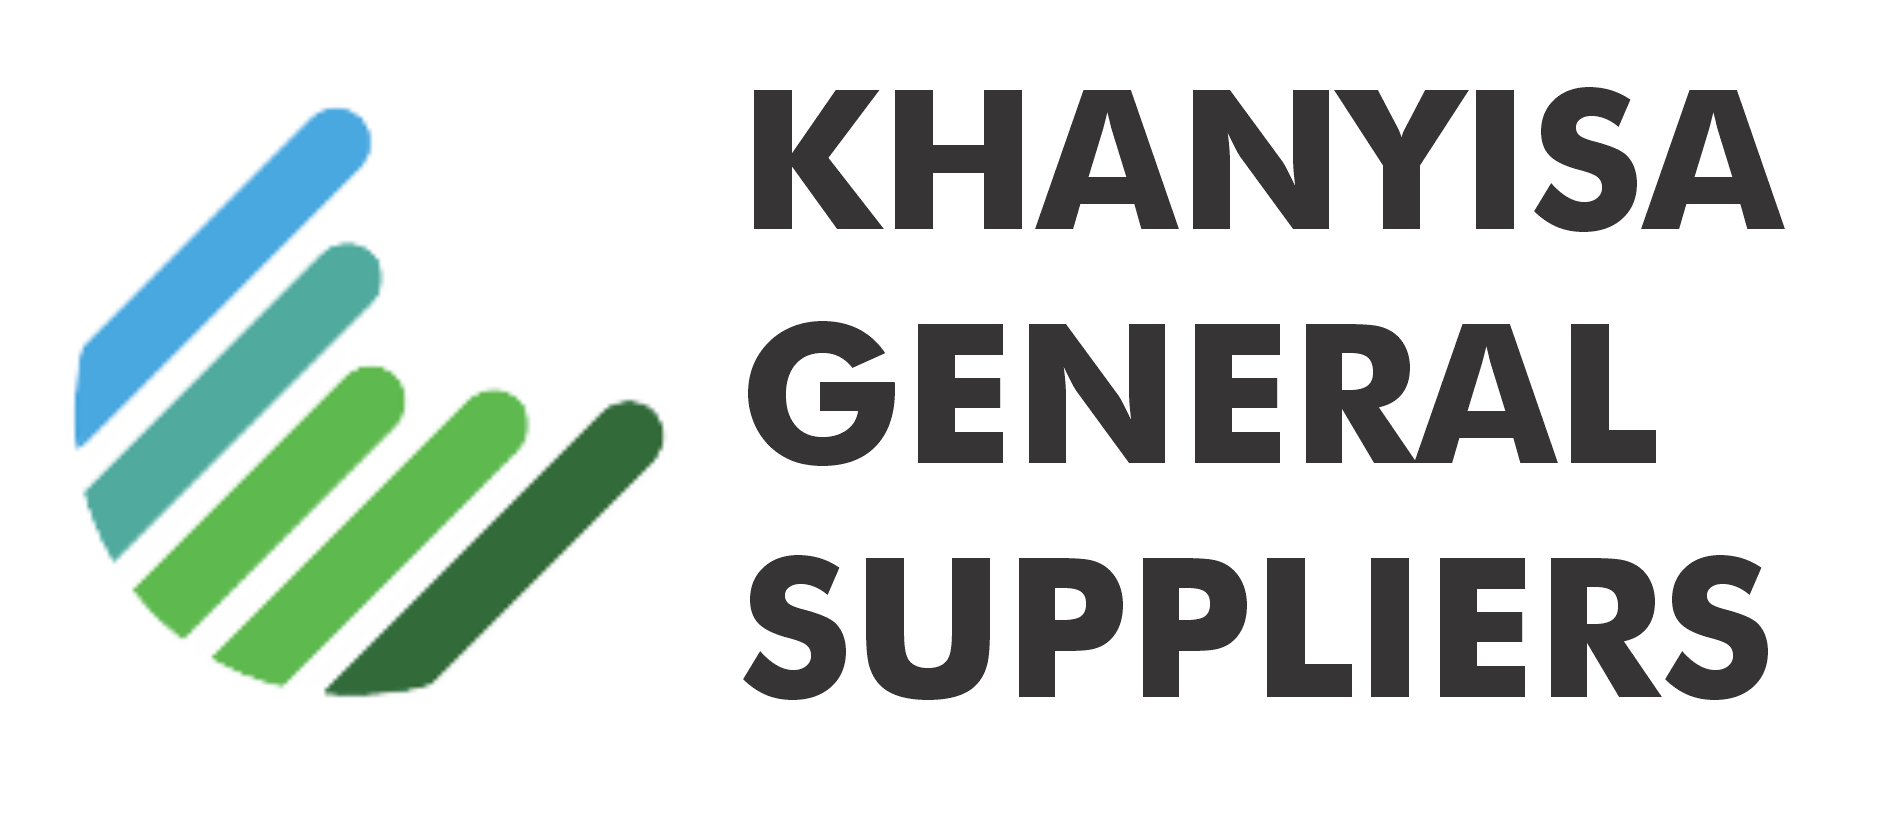 Khanyisa General Suppliers